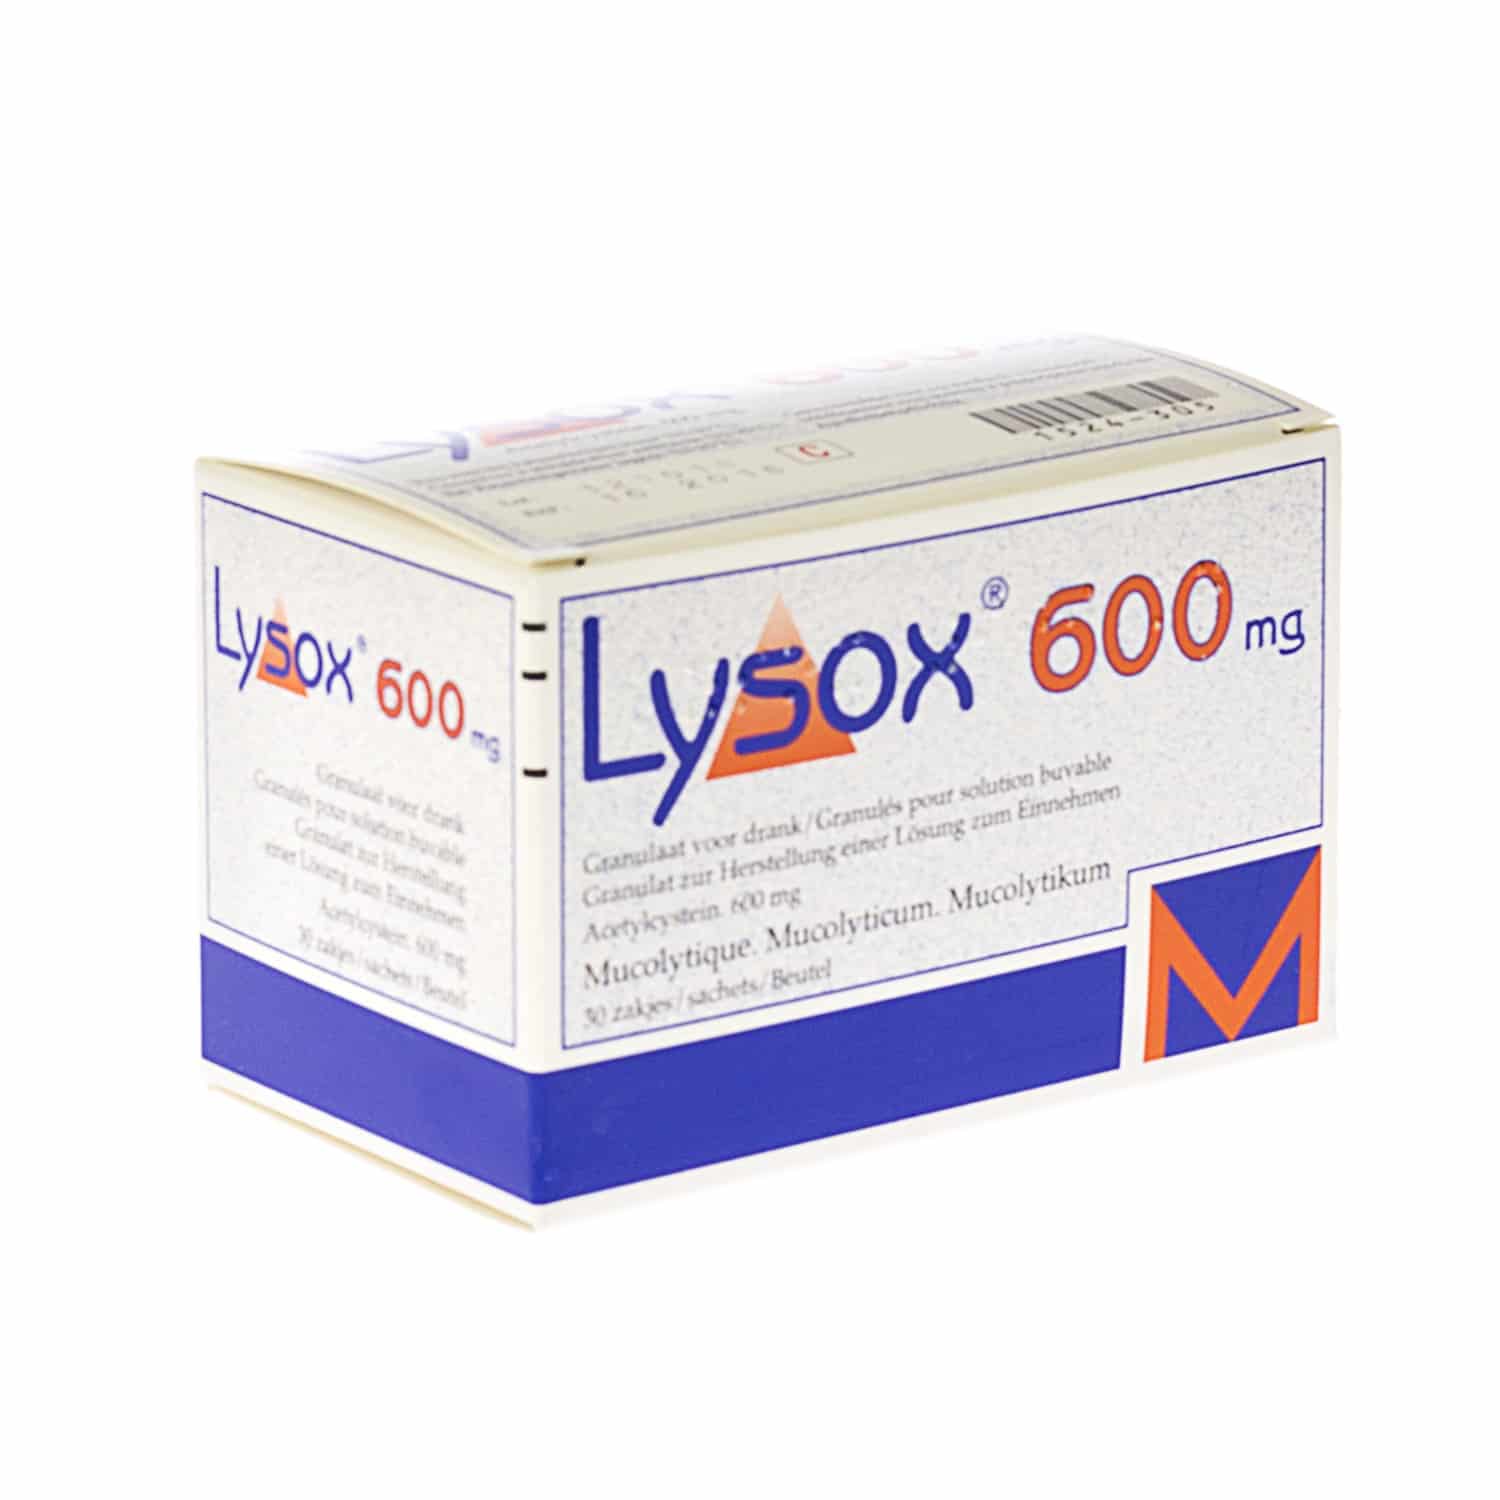 Lysox 600 mg